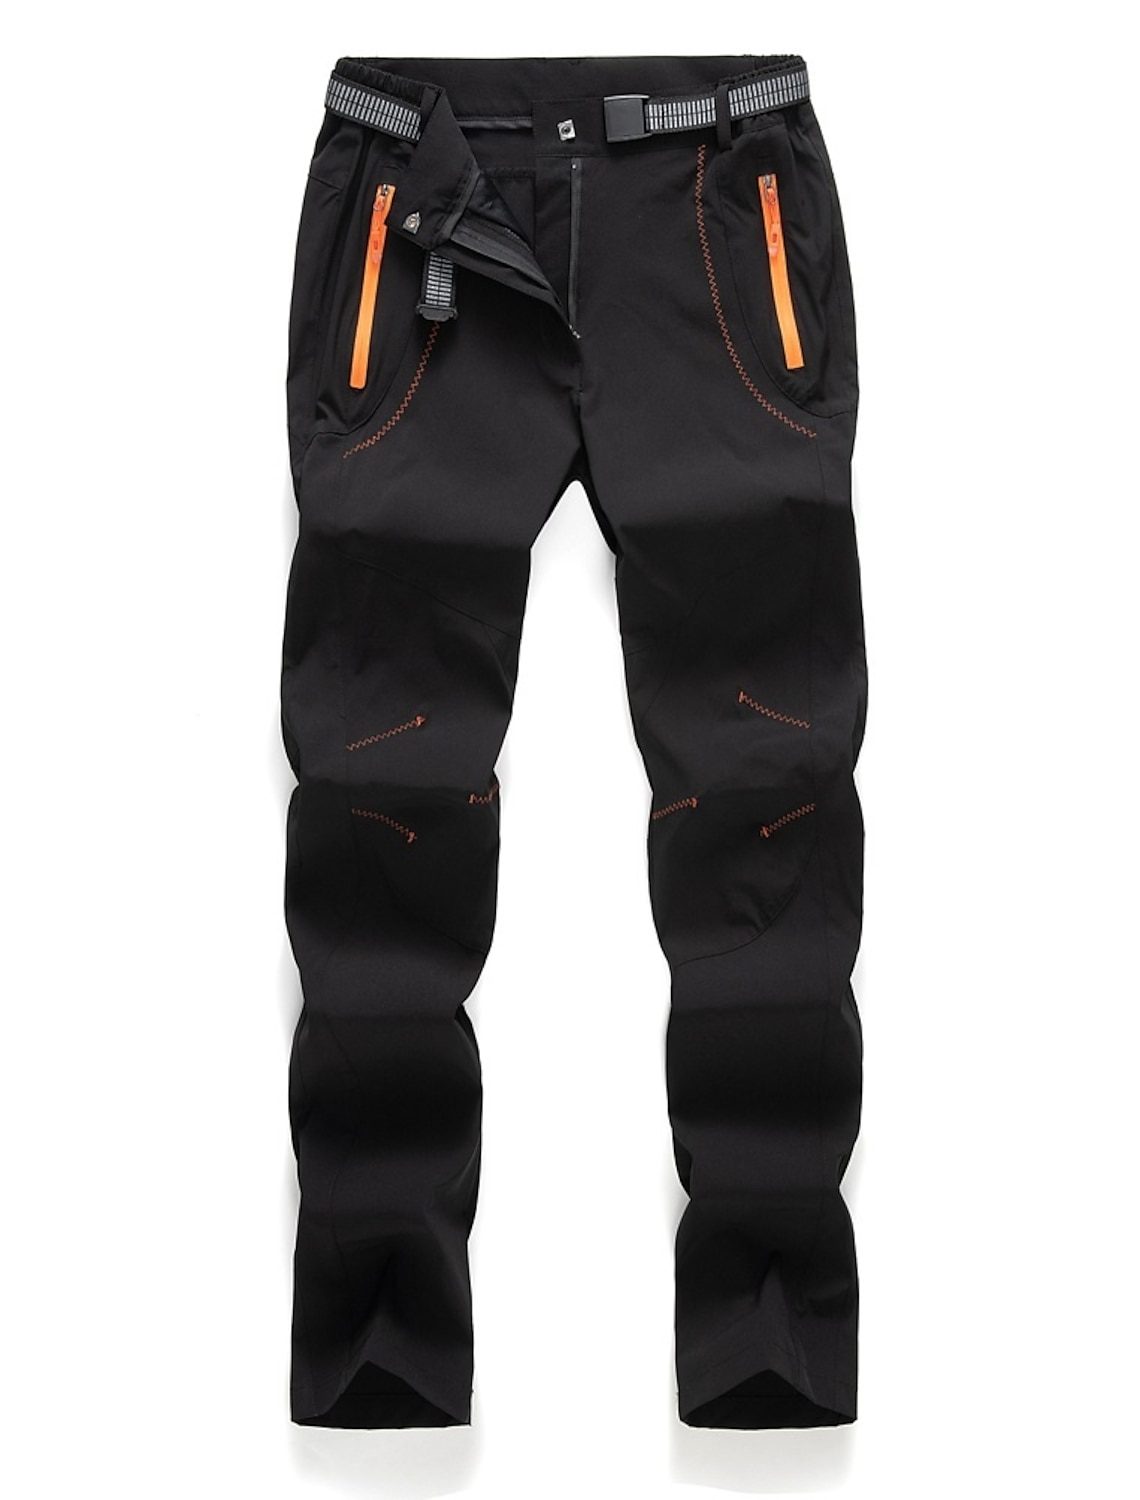 Lakaka Mens Warm Hiking Trousers Softshell Waterproof Windproof Fleece Lined Outdoor Skiing Thermal Sport Pants